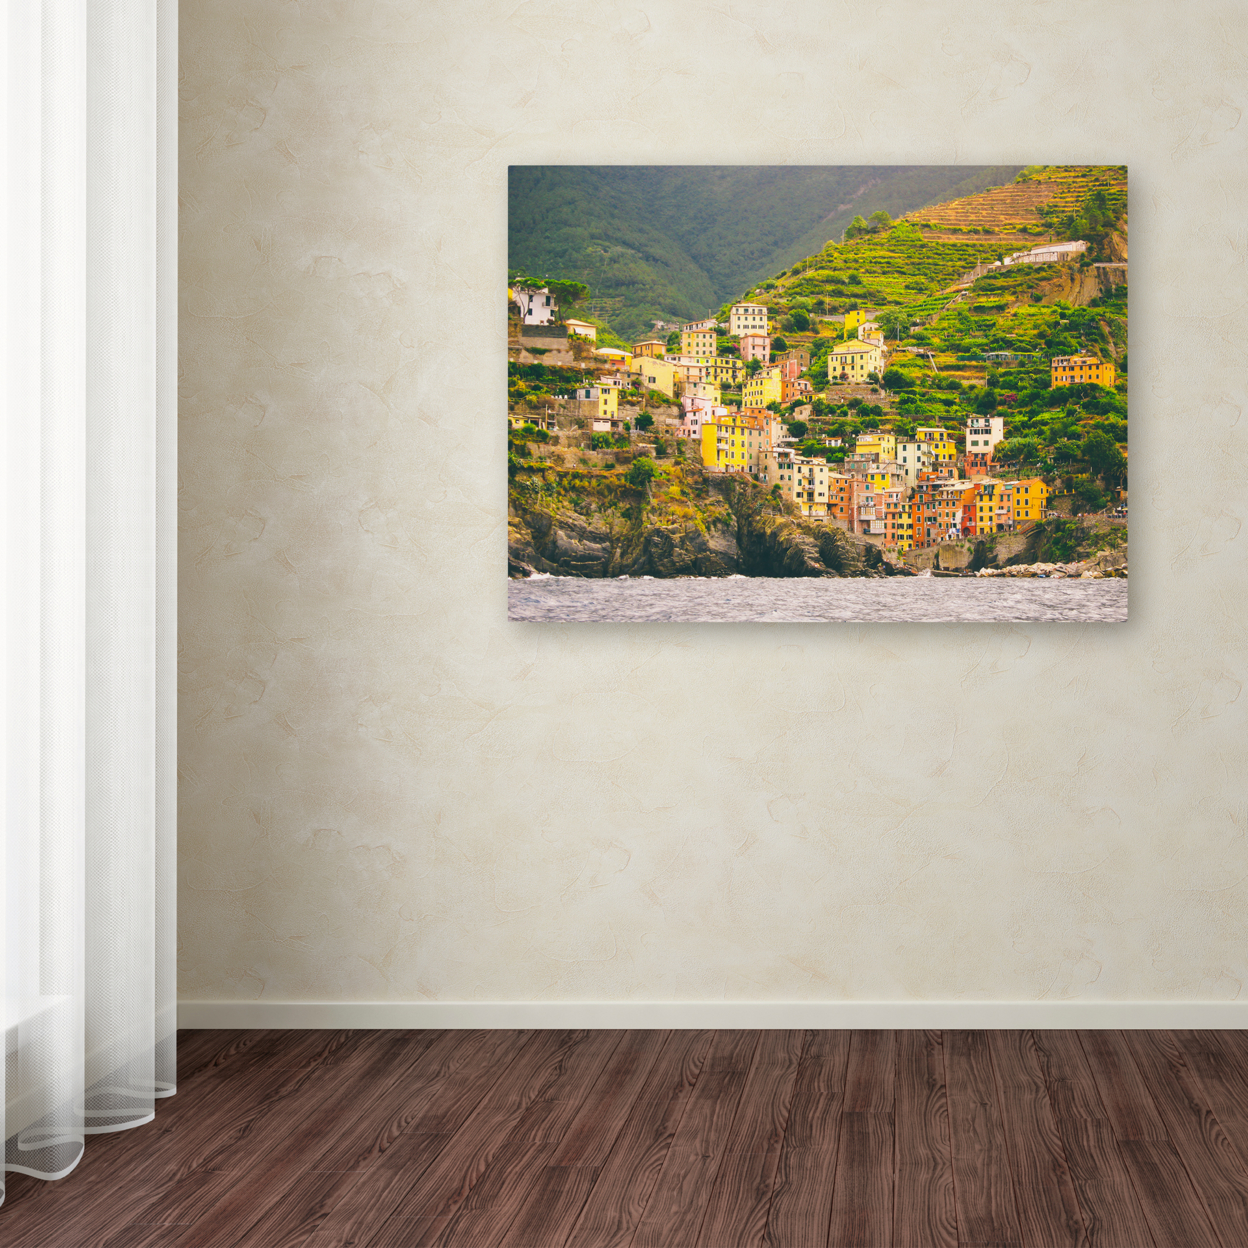 Ariane Moshayedi 'Cinque Terre' Canvas Wall Art 35 X 47 Inches